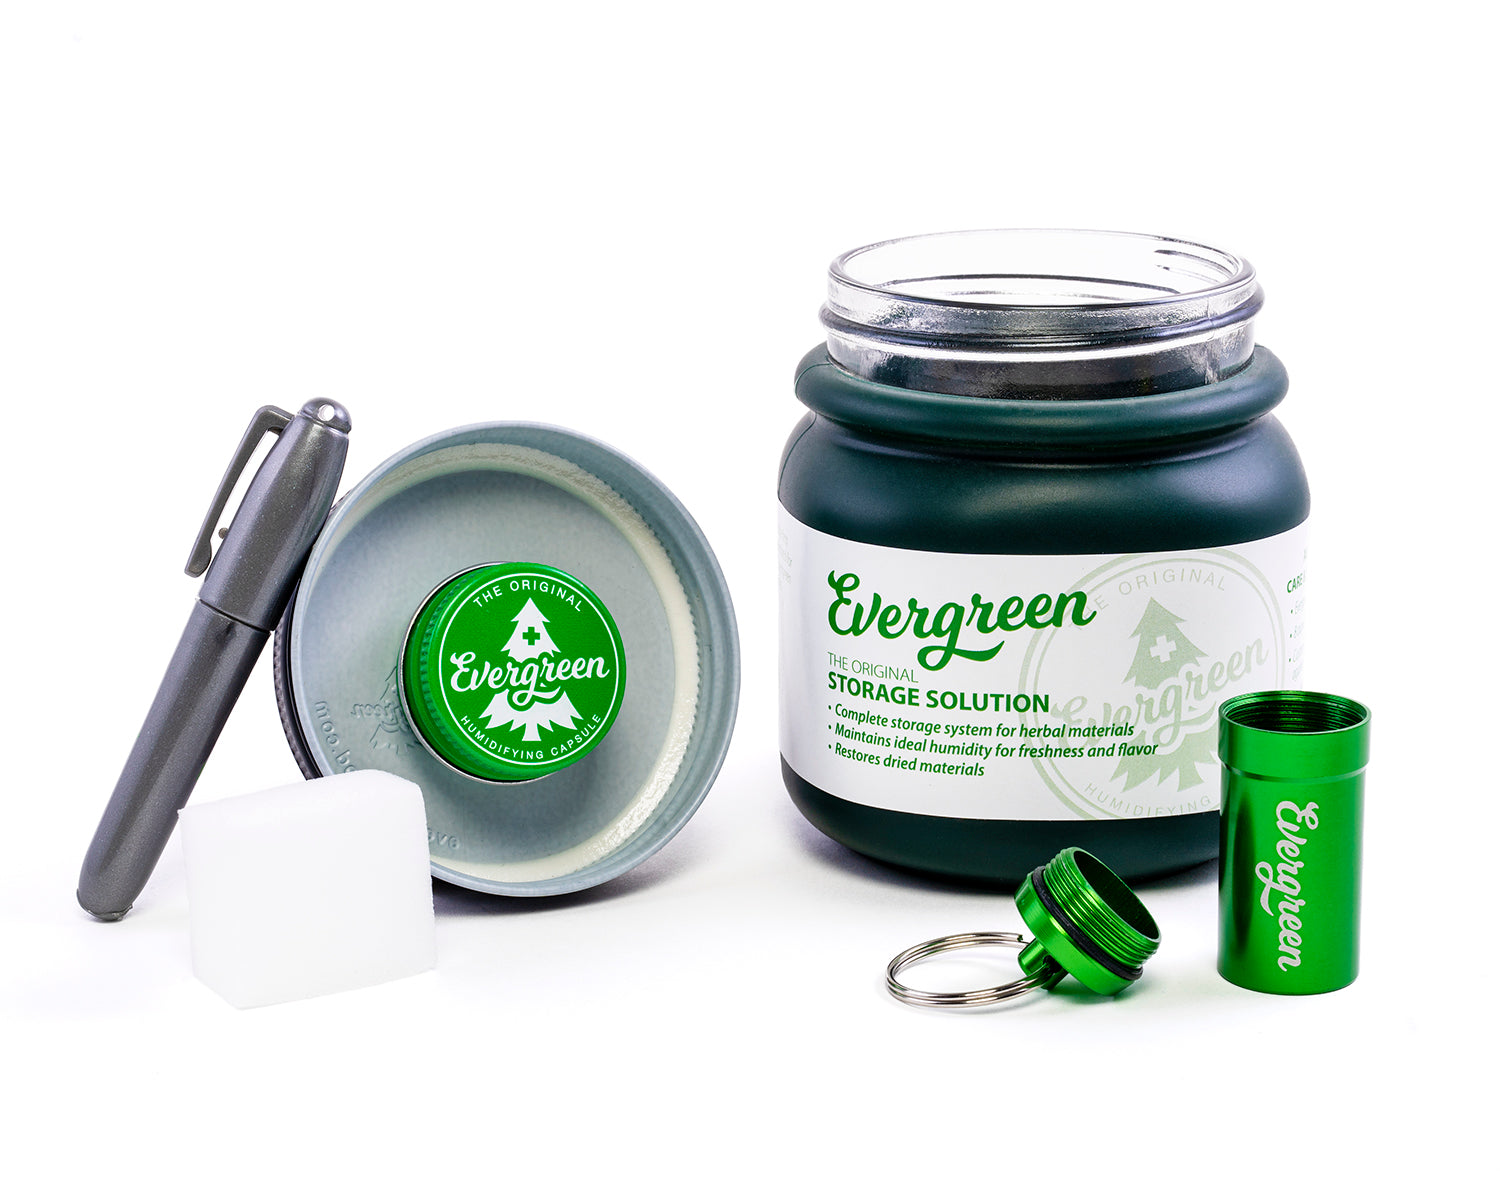 Evergreen Storage Solution open showing contents, dark green